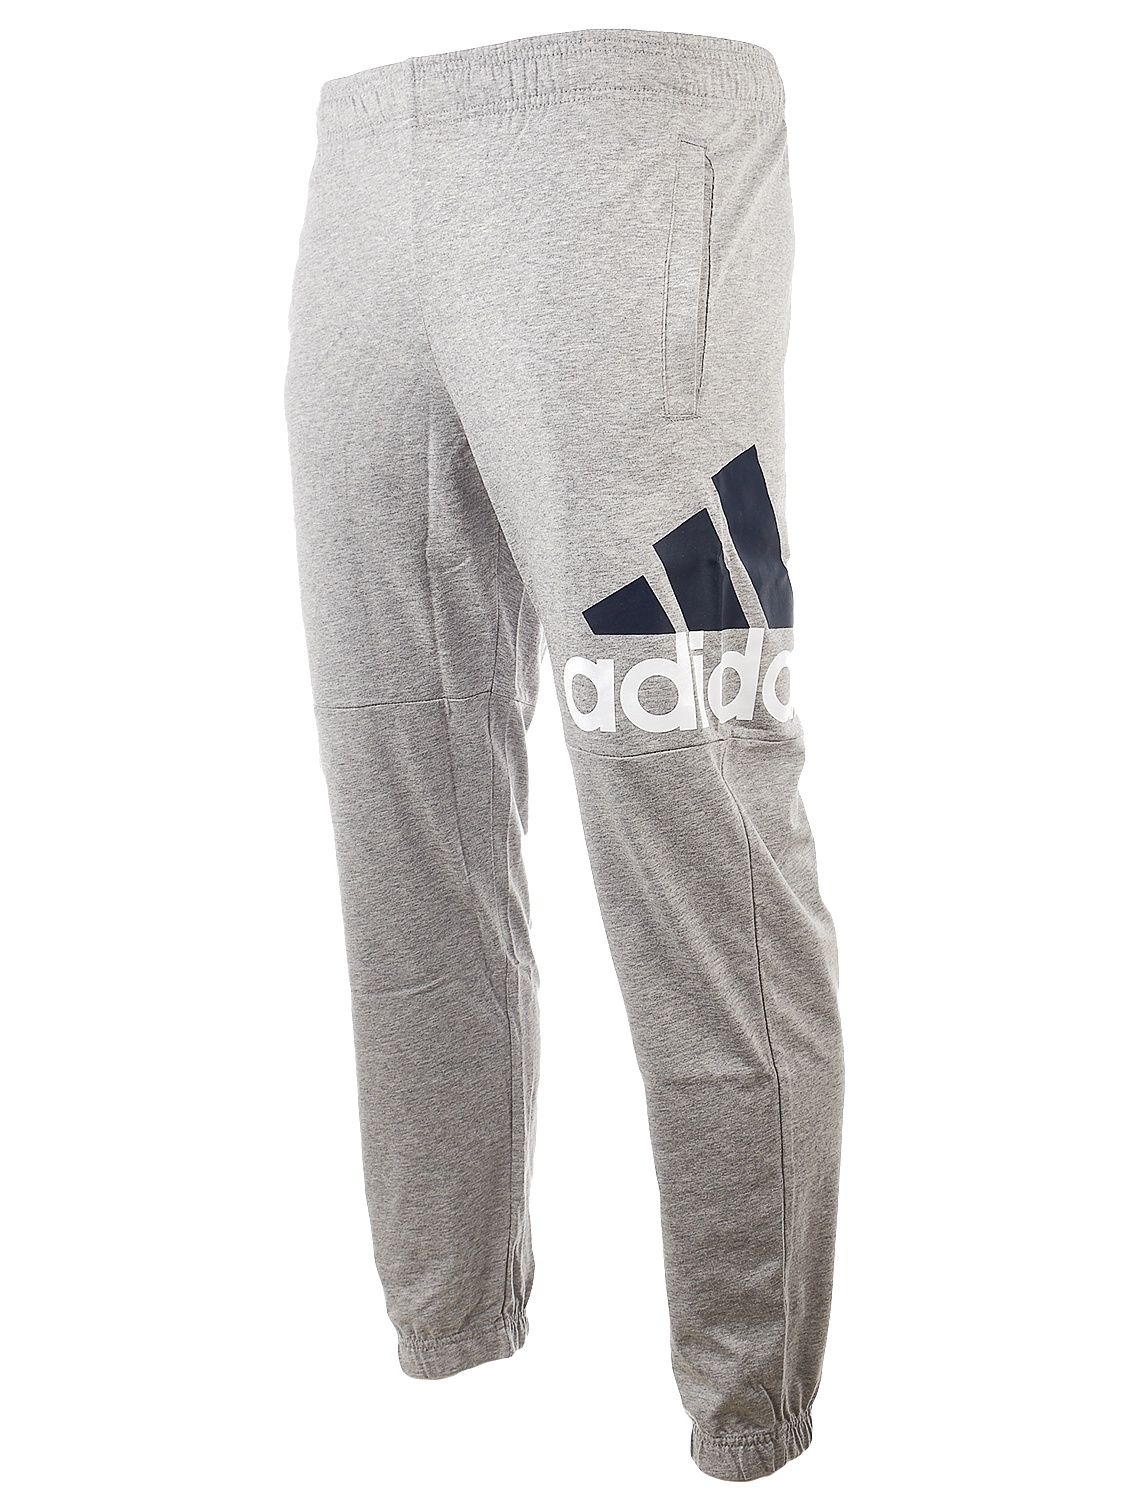 Adidas Essentials Performance Logo Pants - Medium Grey Heather/White/Black - Mens - XL - image 3 of 3